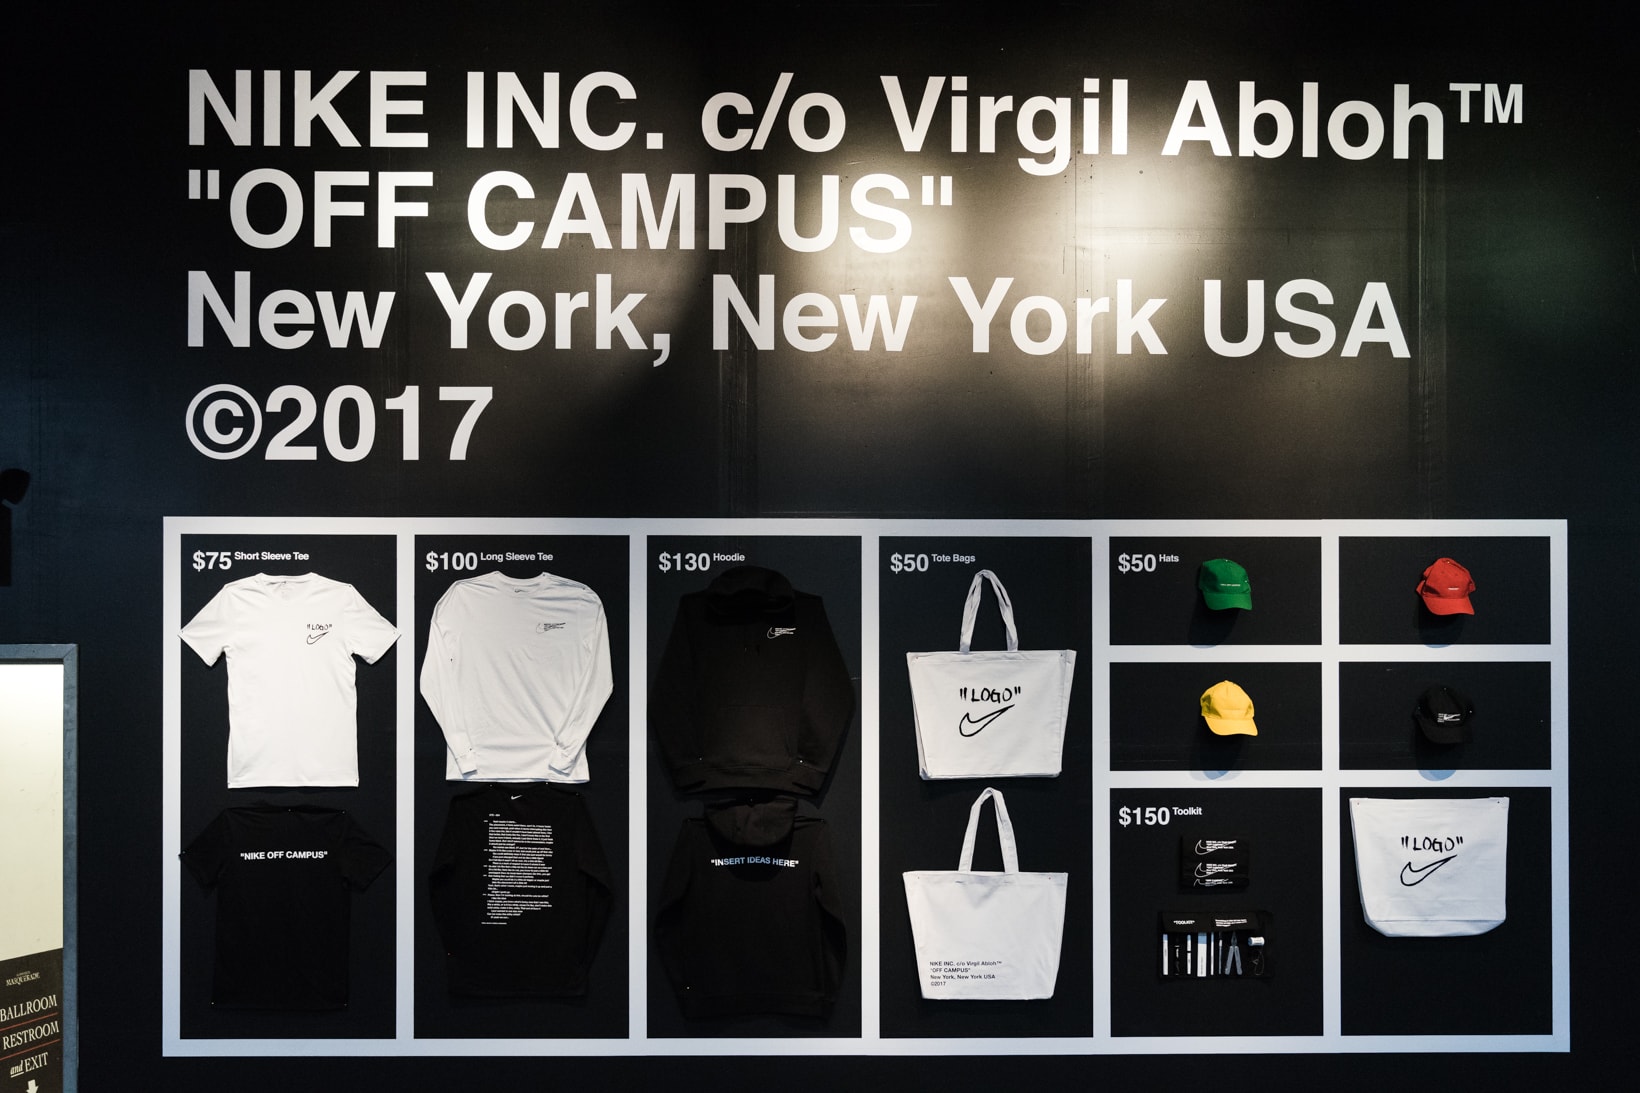 HYPEBEAST 直擊回顧 Virgil Abloh x Nike「Off Campus」紐約期限活動